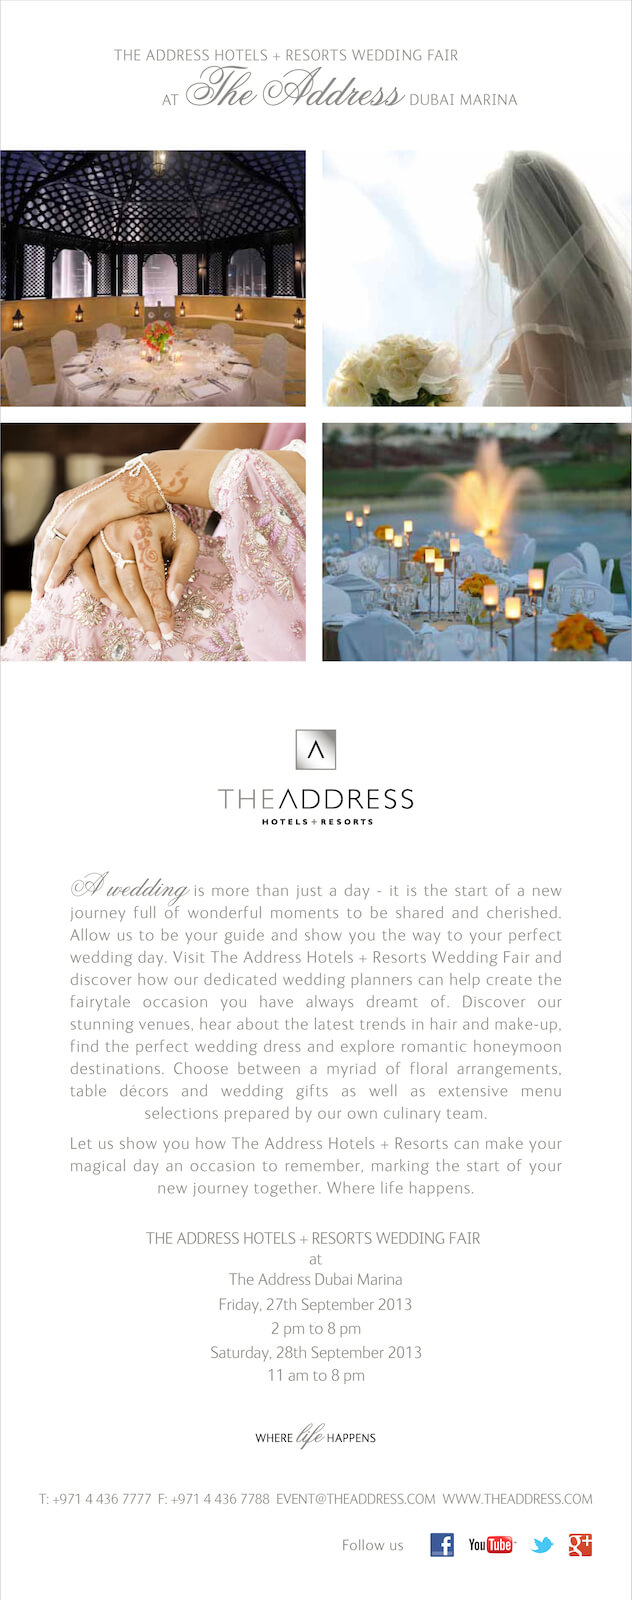 The Wedding Fair - The Address Hotels